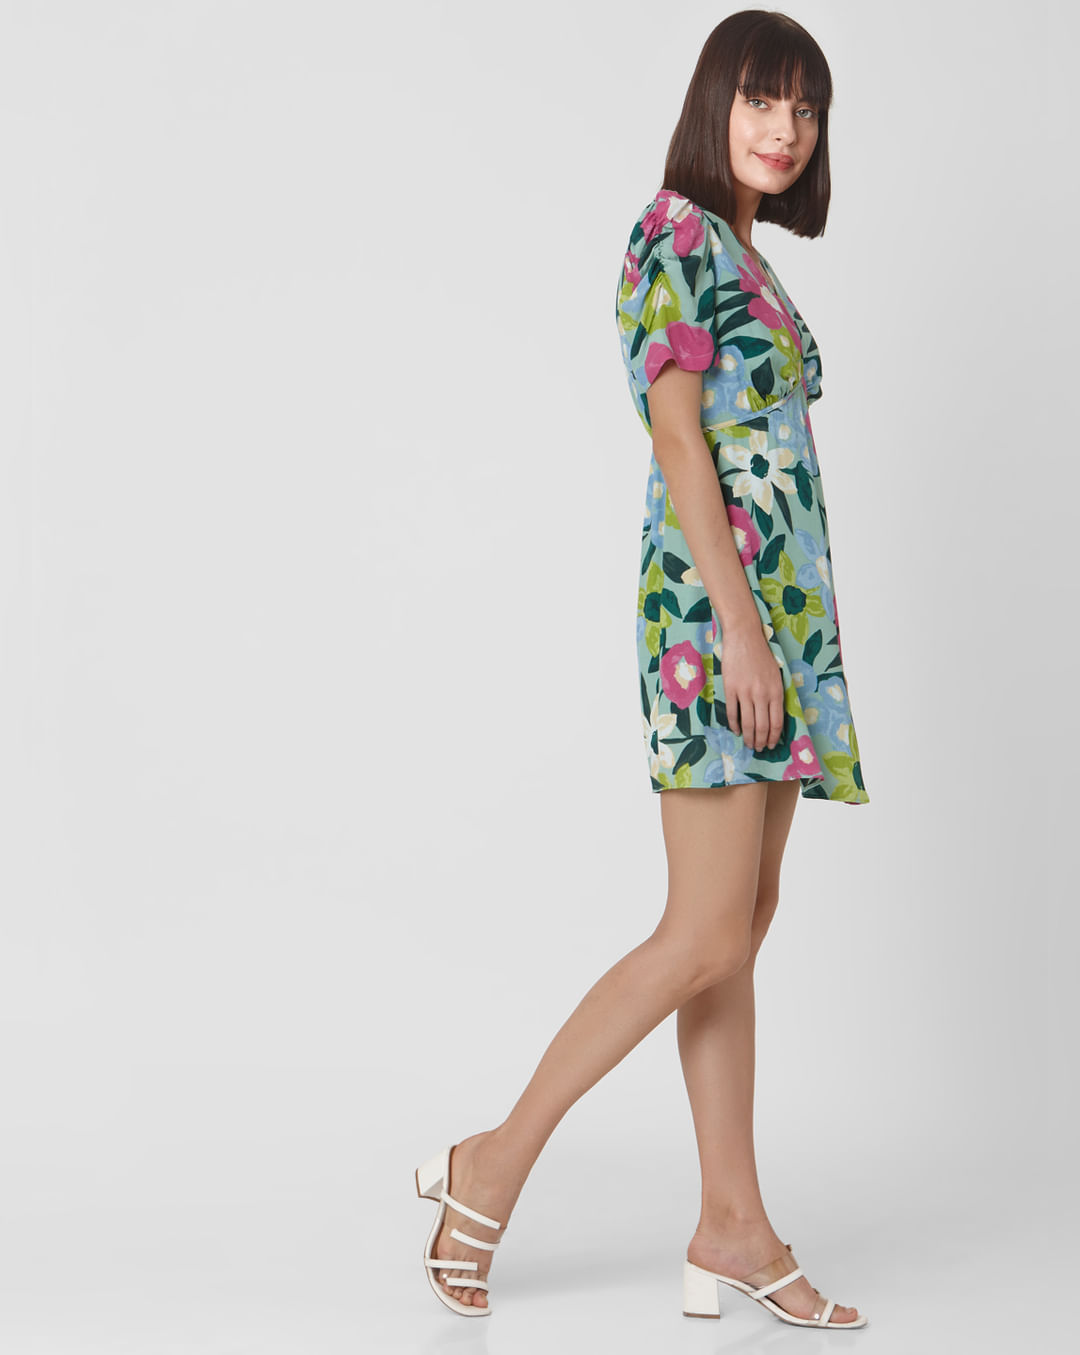 Fremmed sammenbrud umoral Mini Dress for Women - Buy Green All Over Floral Print Mini Dress Online In  India.